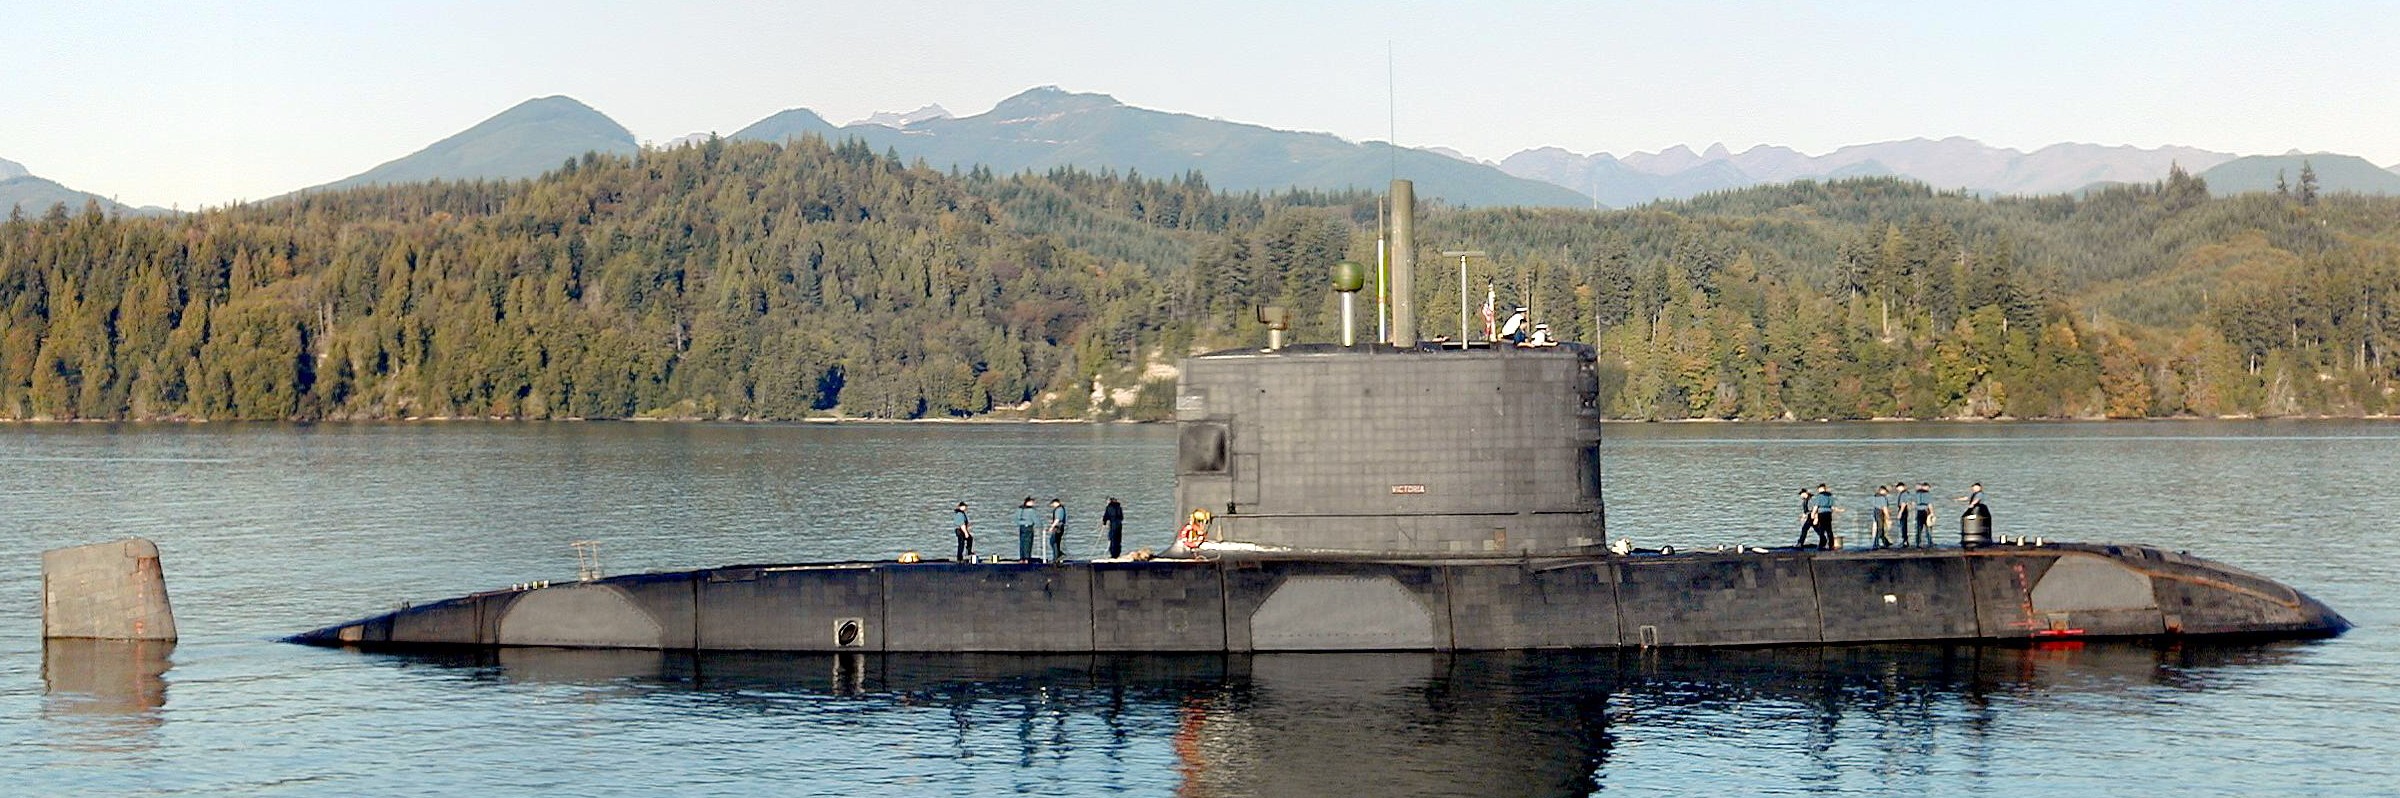 ssk-876 hmcs victoria upholder class attack submarine hunter killer ncsm royal canadian navy 03